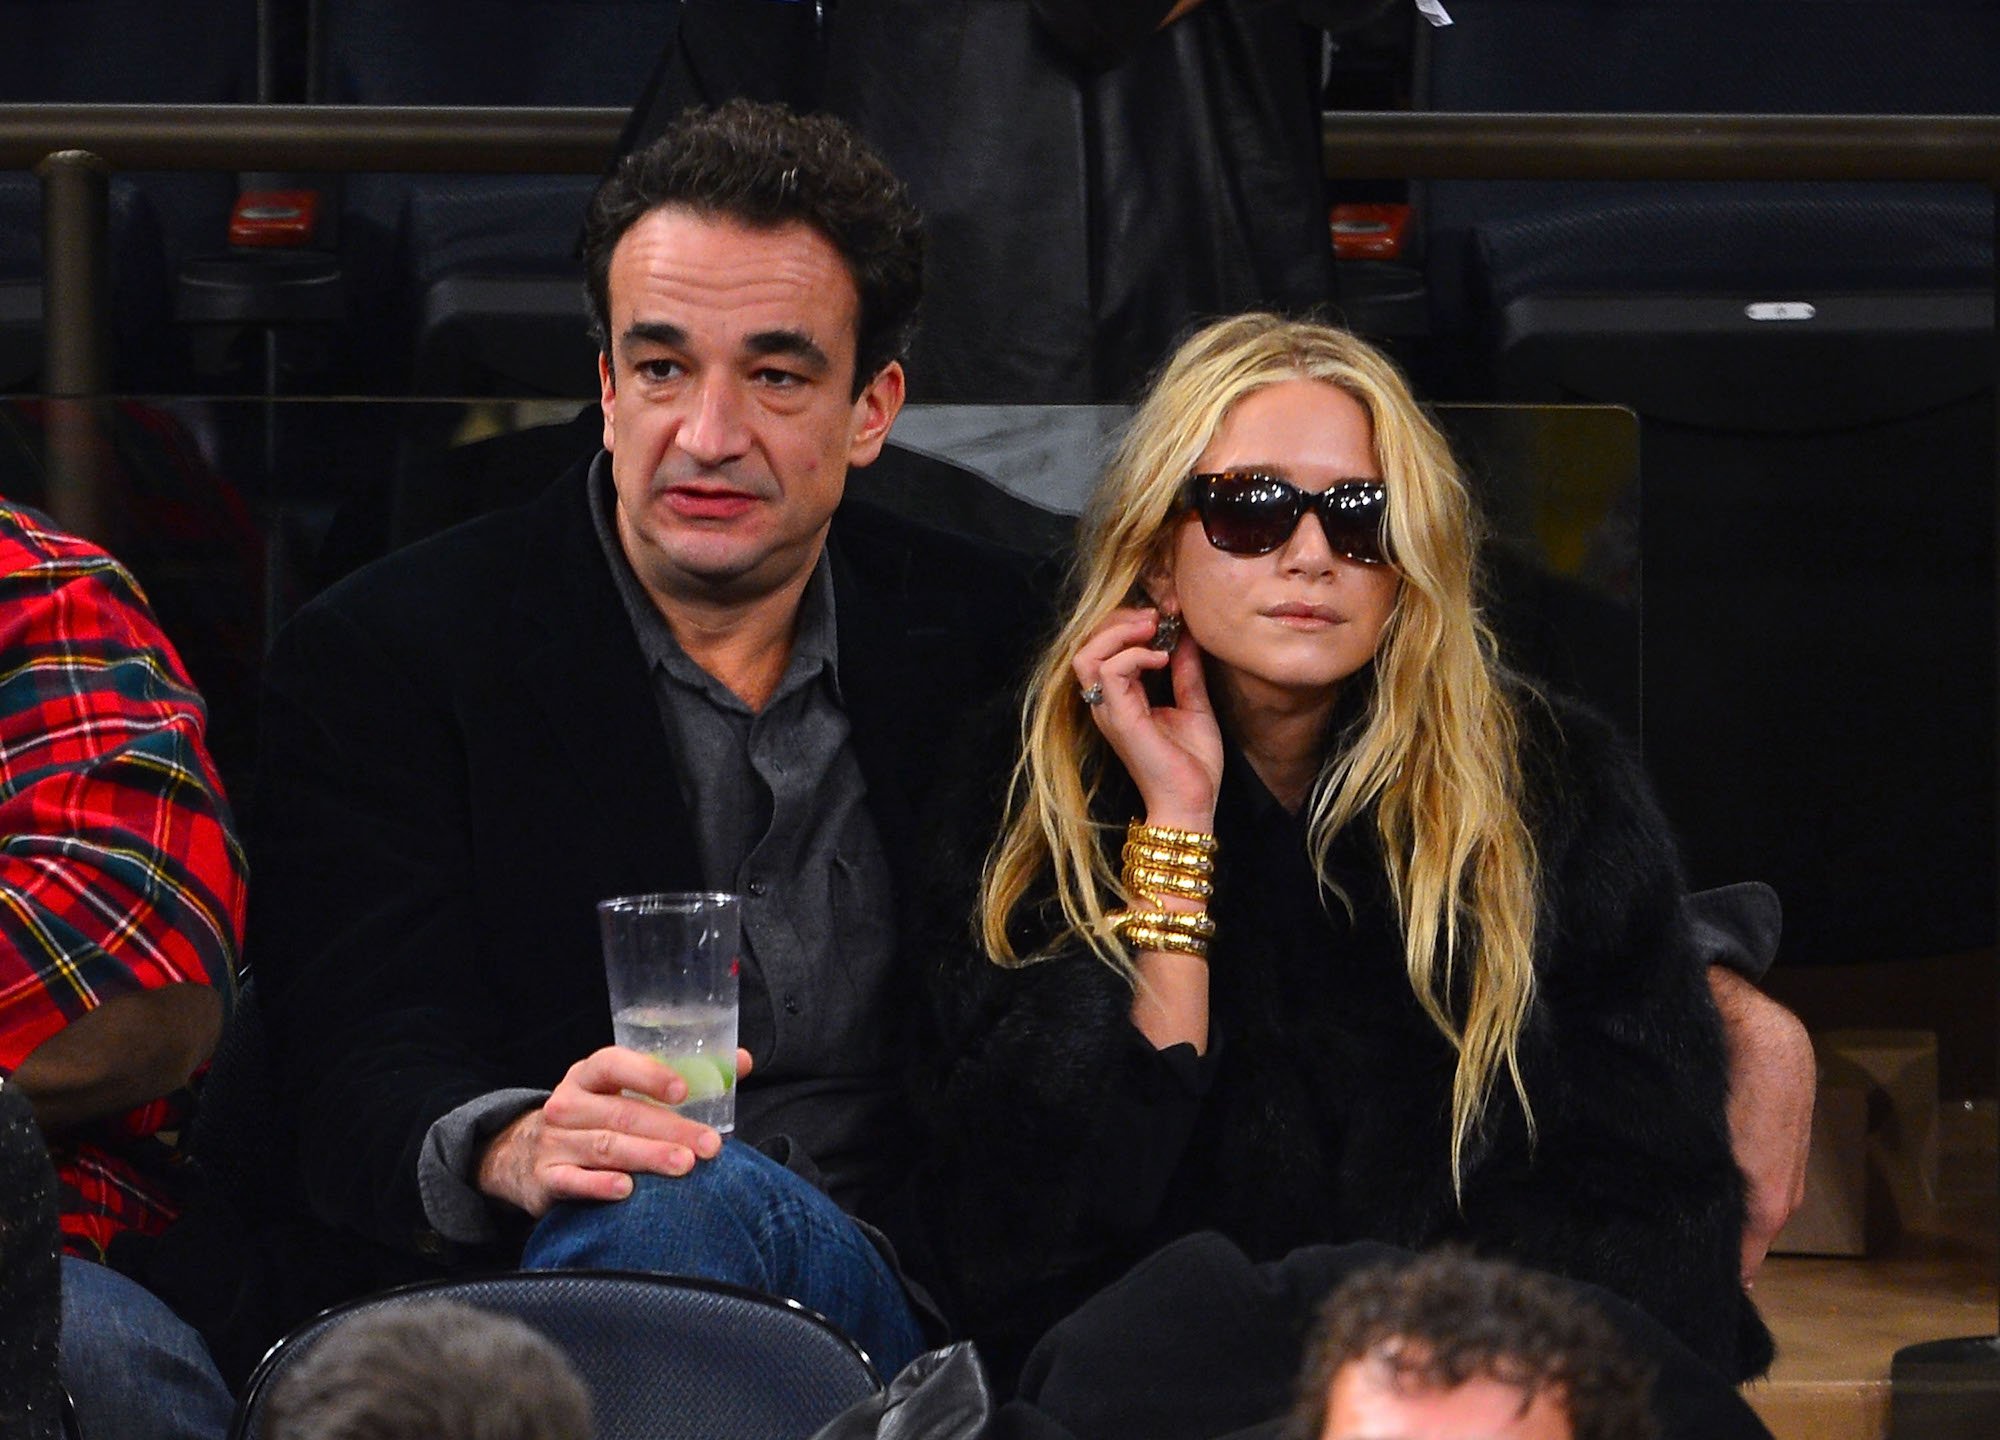 Olivier Sarkozy and Mary-Kate Olsen